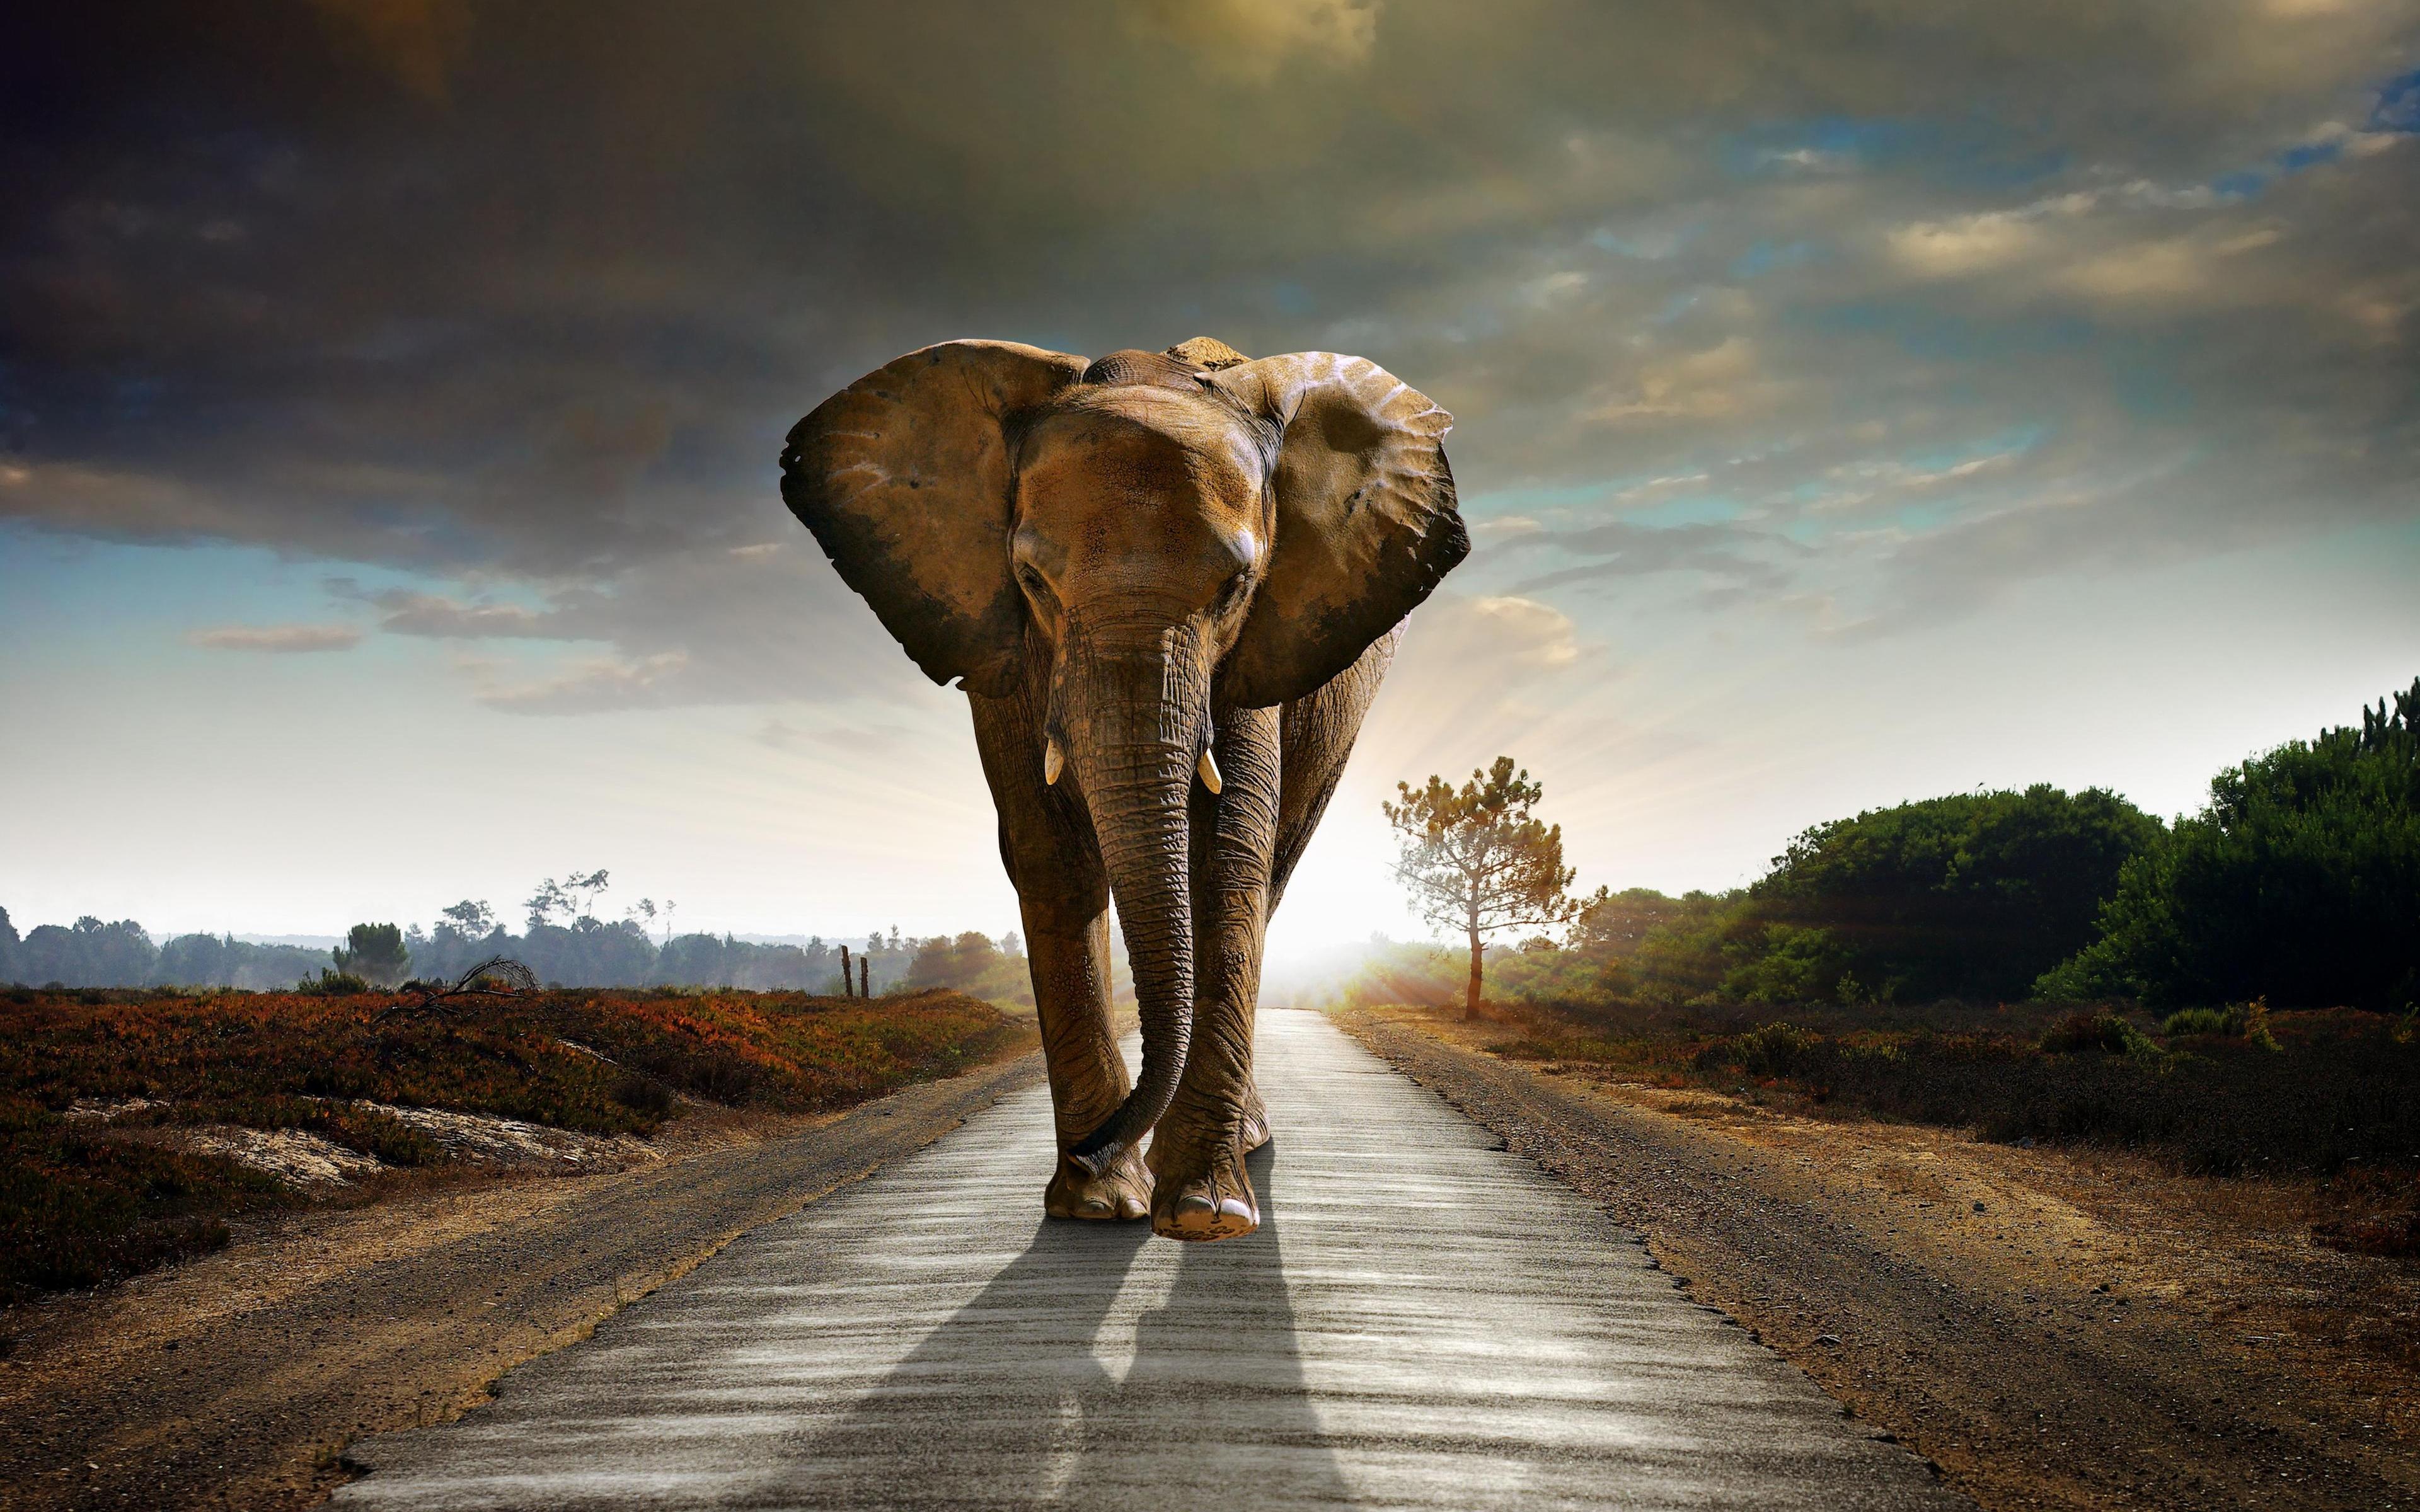 Big Elephant Wallpaper Free Download Of A Giant Elephant